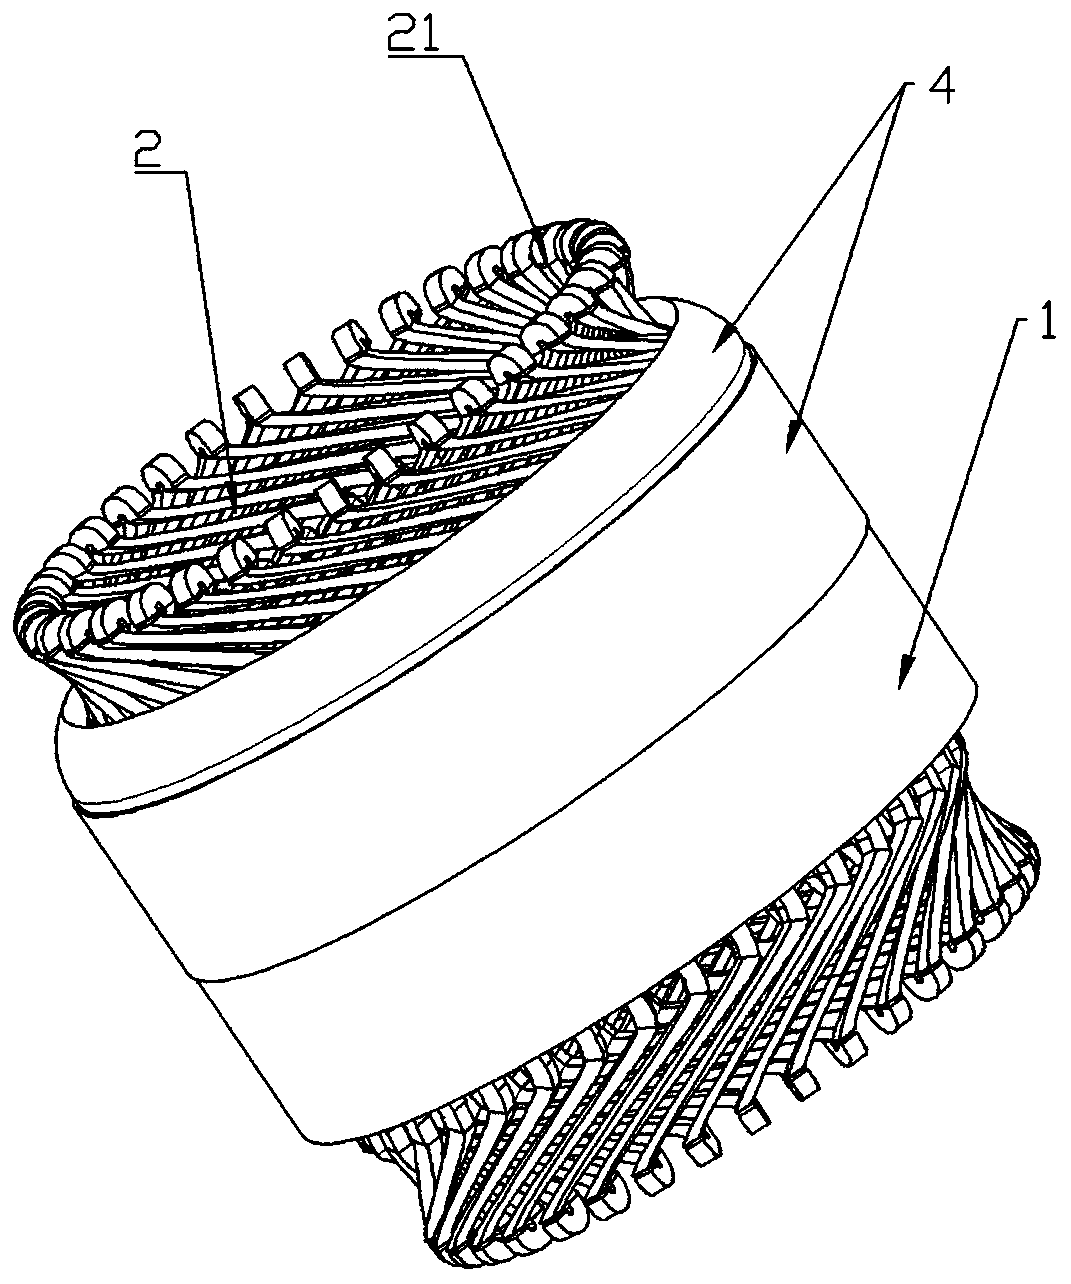 Heat radiation structure of motor stator winding